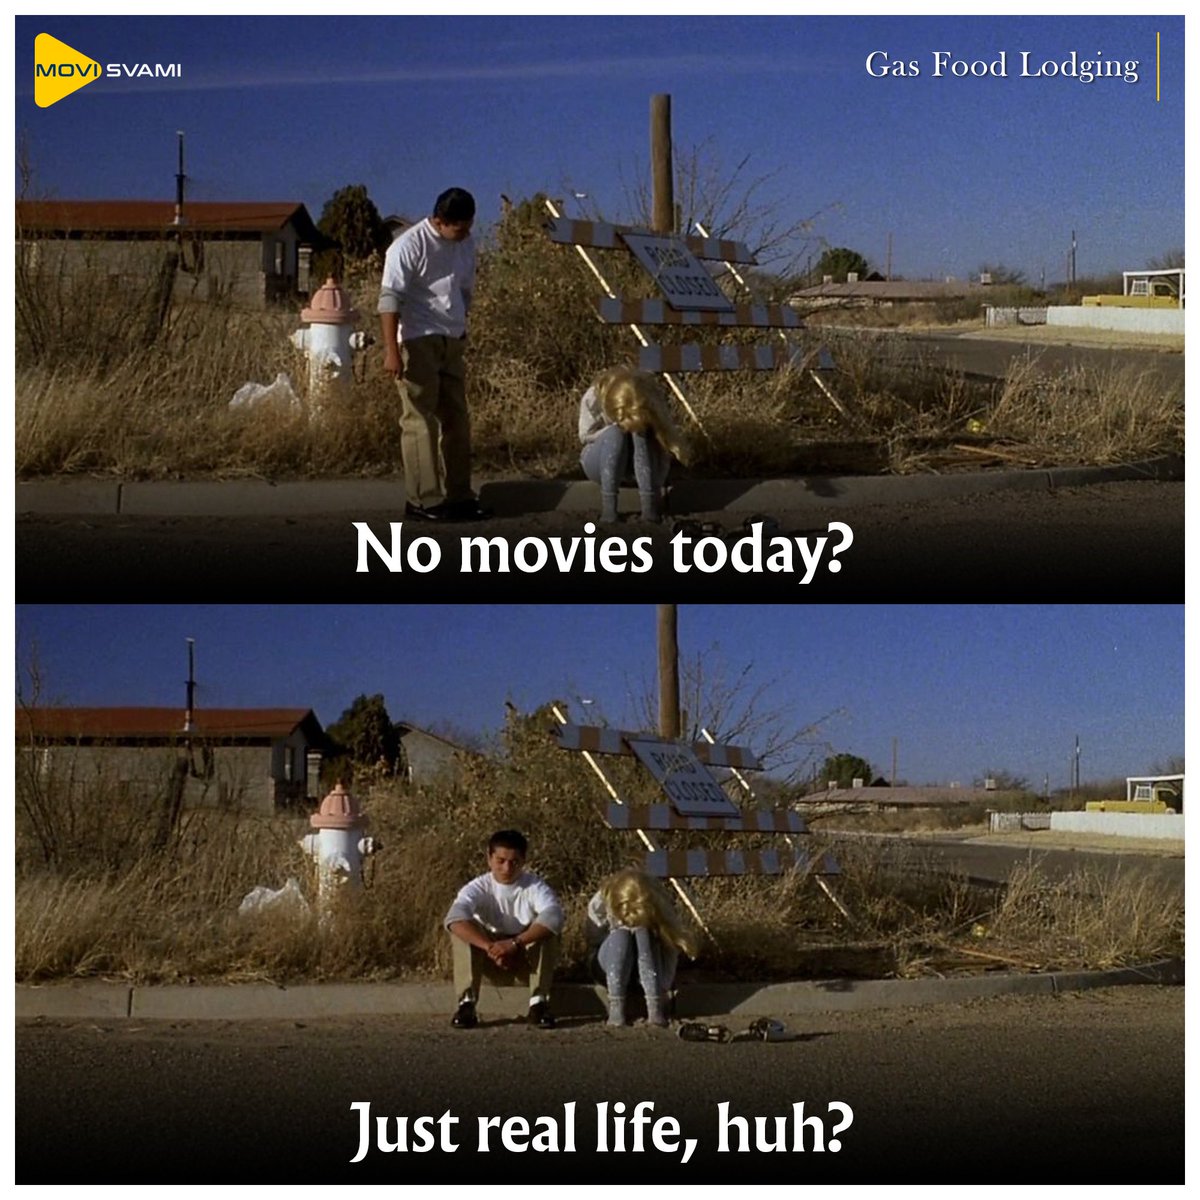 Gas Food Lodging (1992) #GasFoodLodging #movies #moviescenes #movisvami #moviesinlife